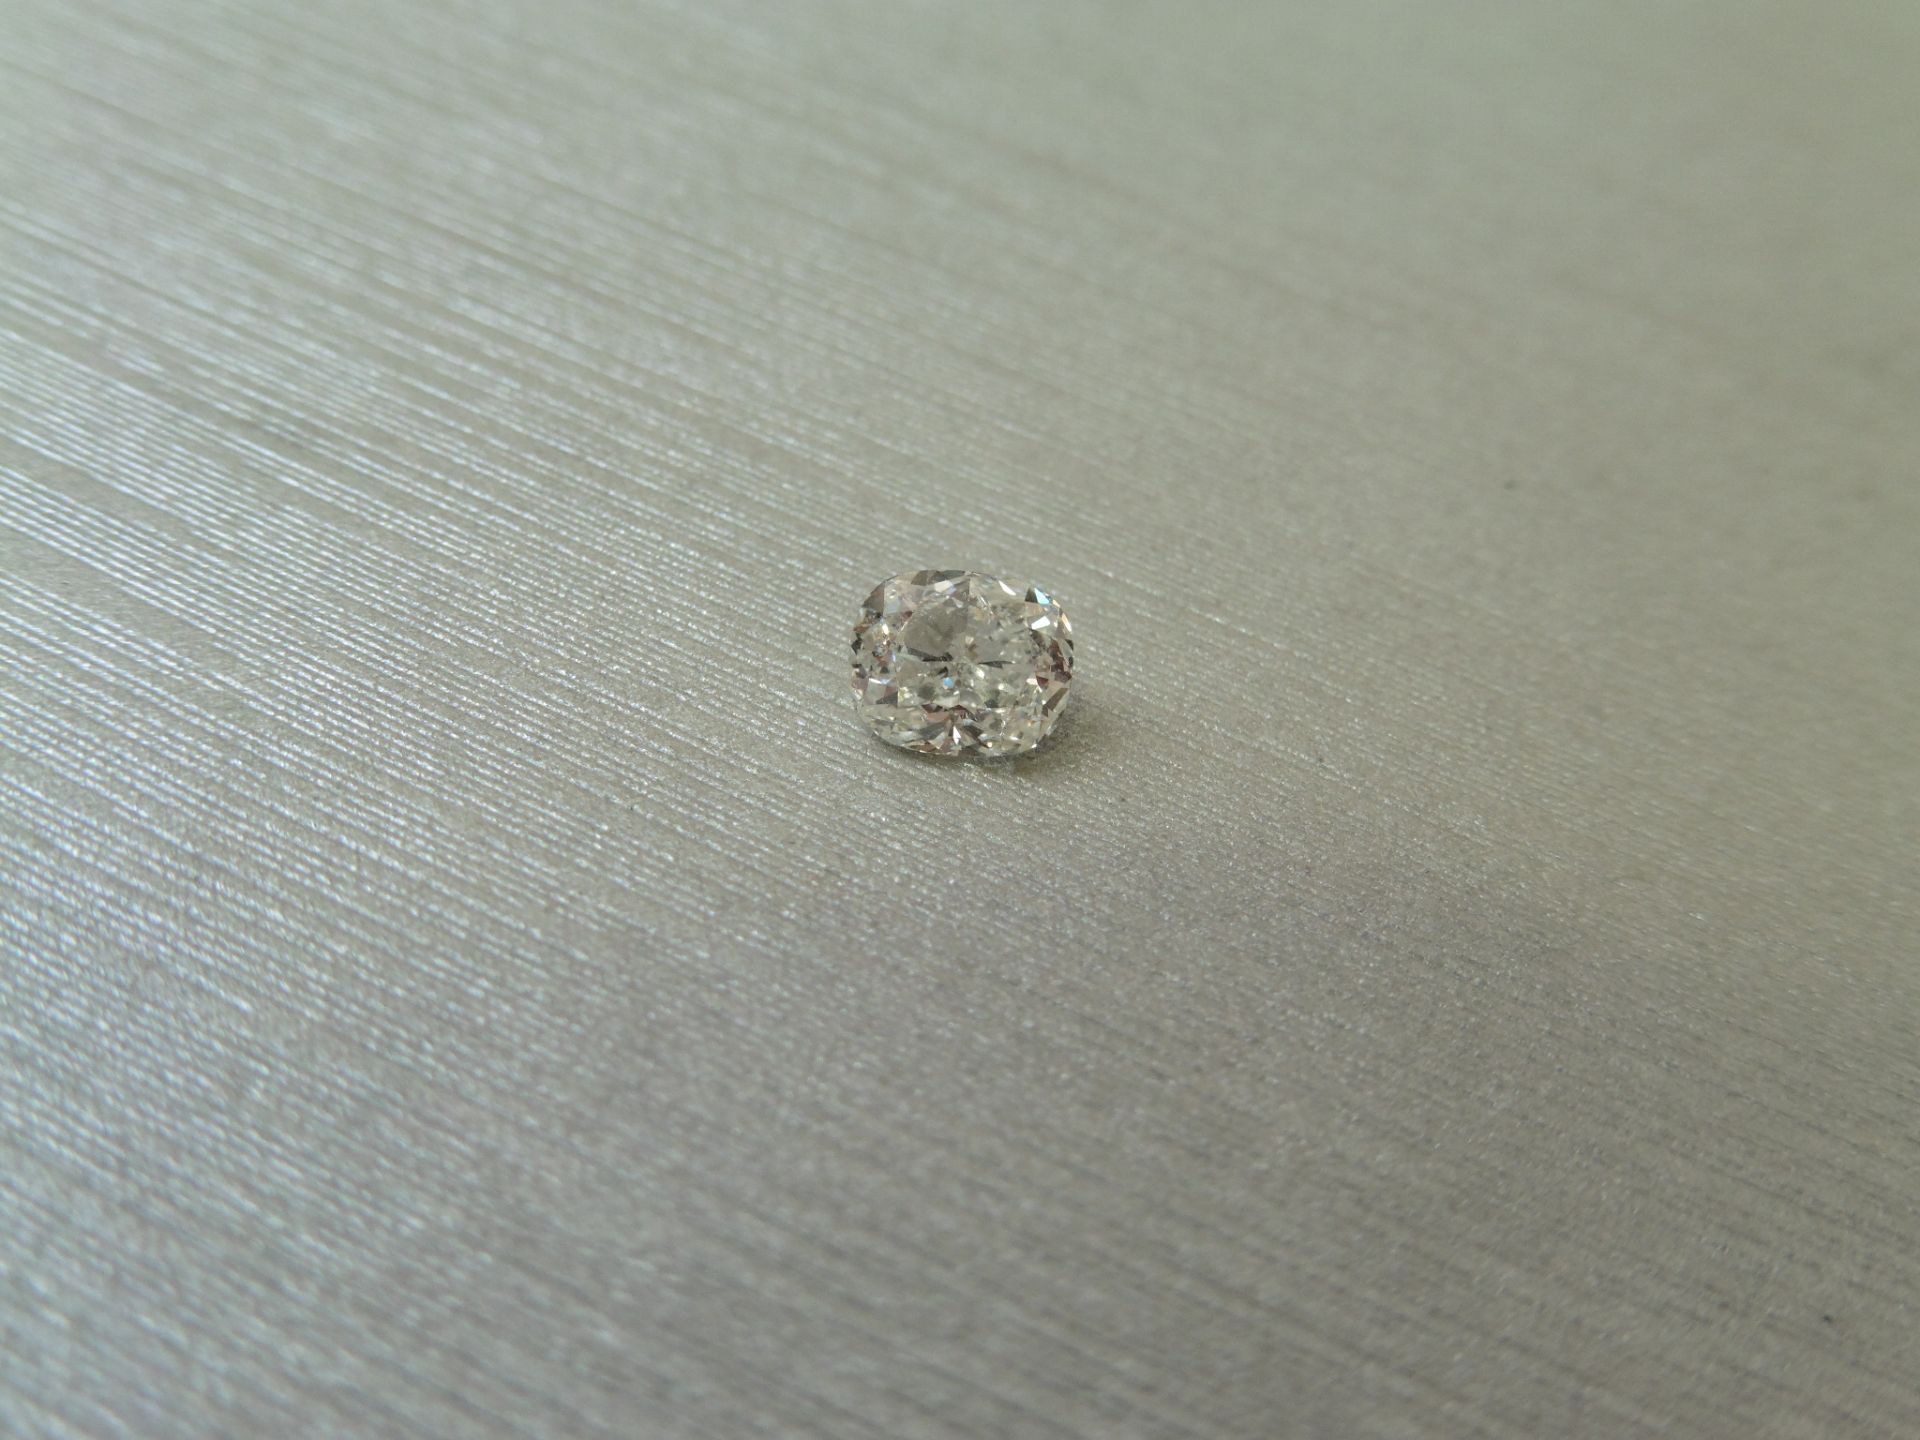 1.50ct single cushion cut diamond. Measurements 6.48 x 6.36 x 4.44mm. J colour and Si1 clarity.